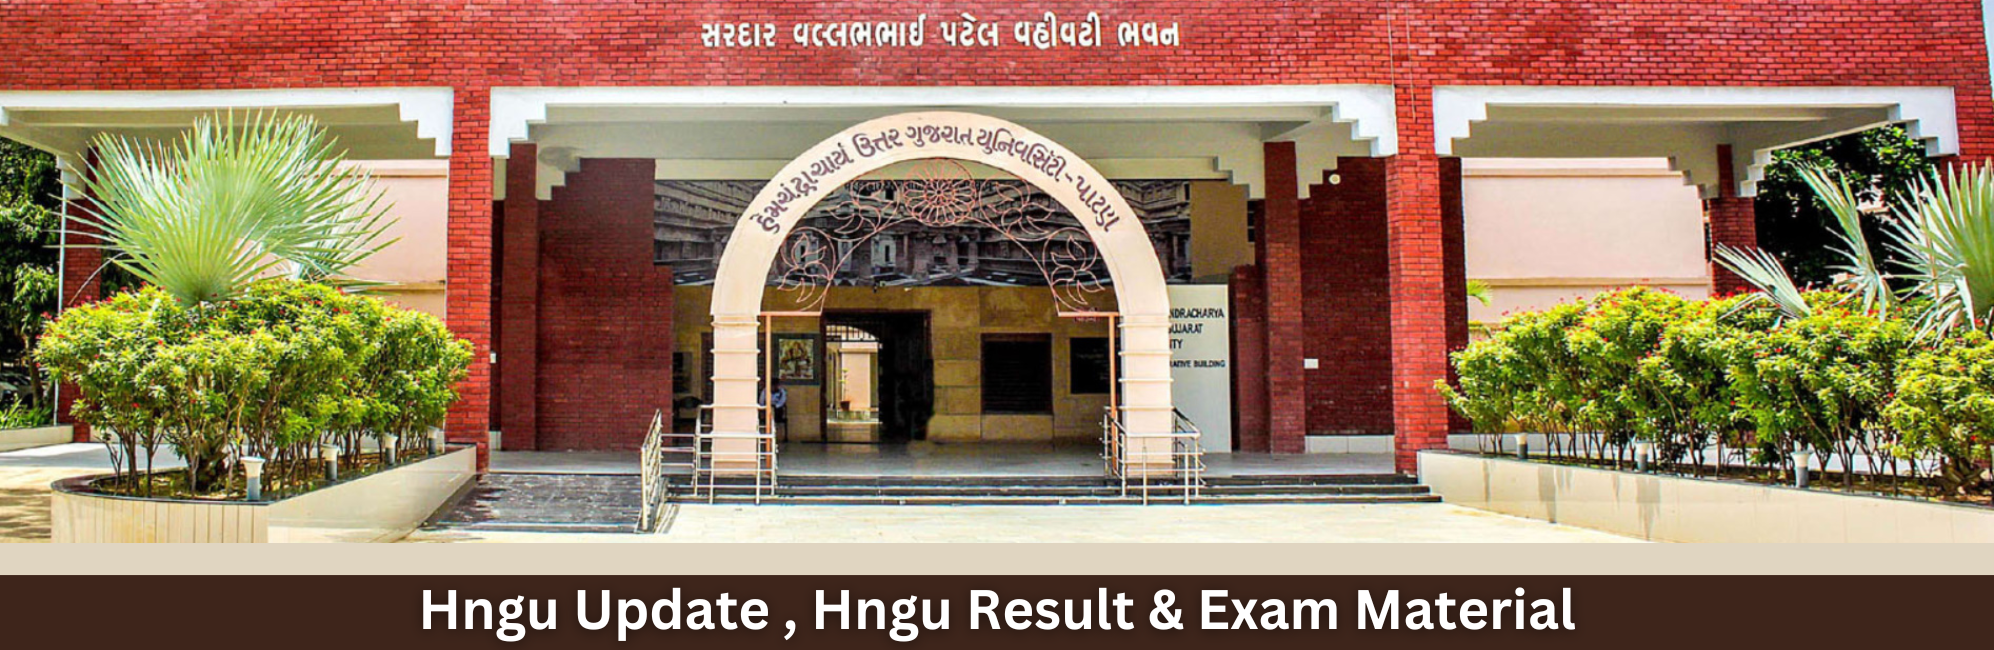 Hngu Update , Hngu Result and Hngu Exam Material (1)